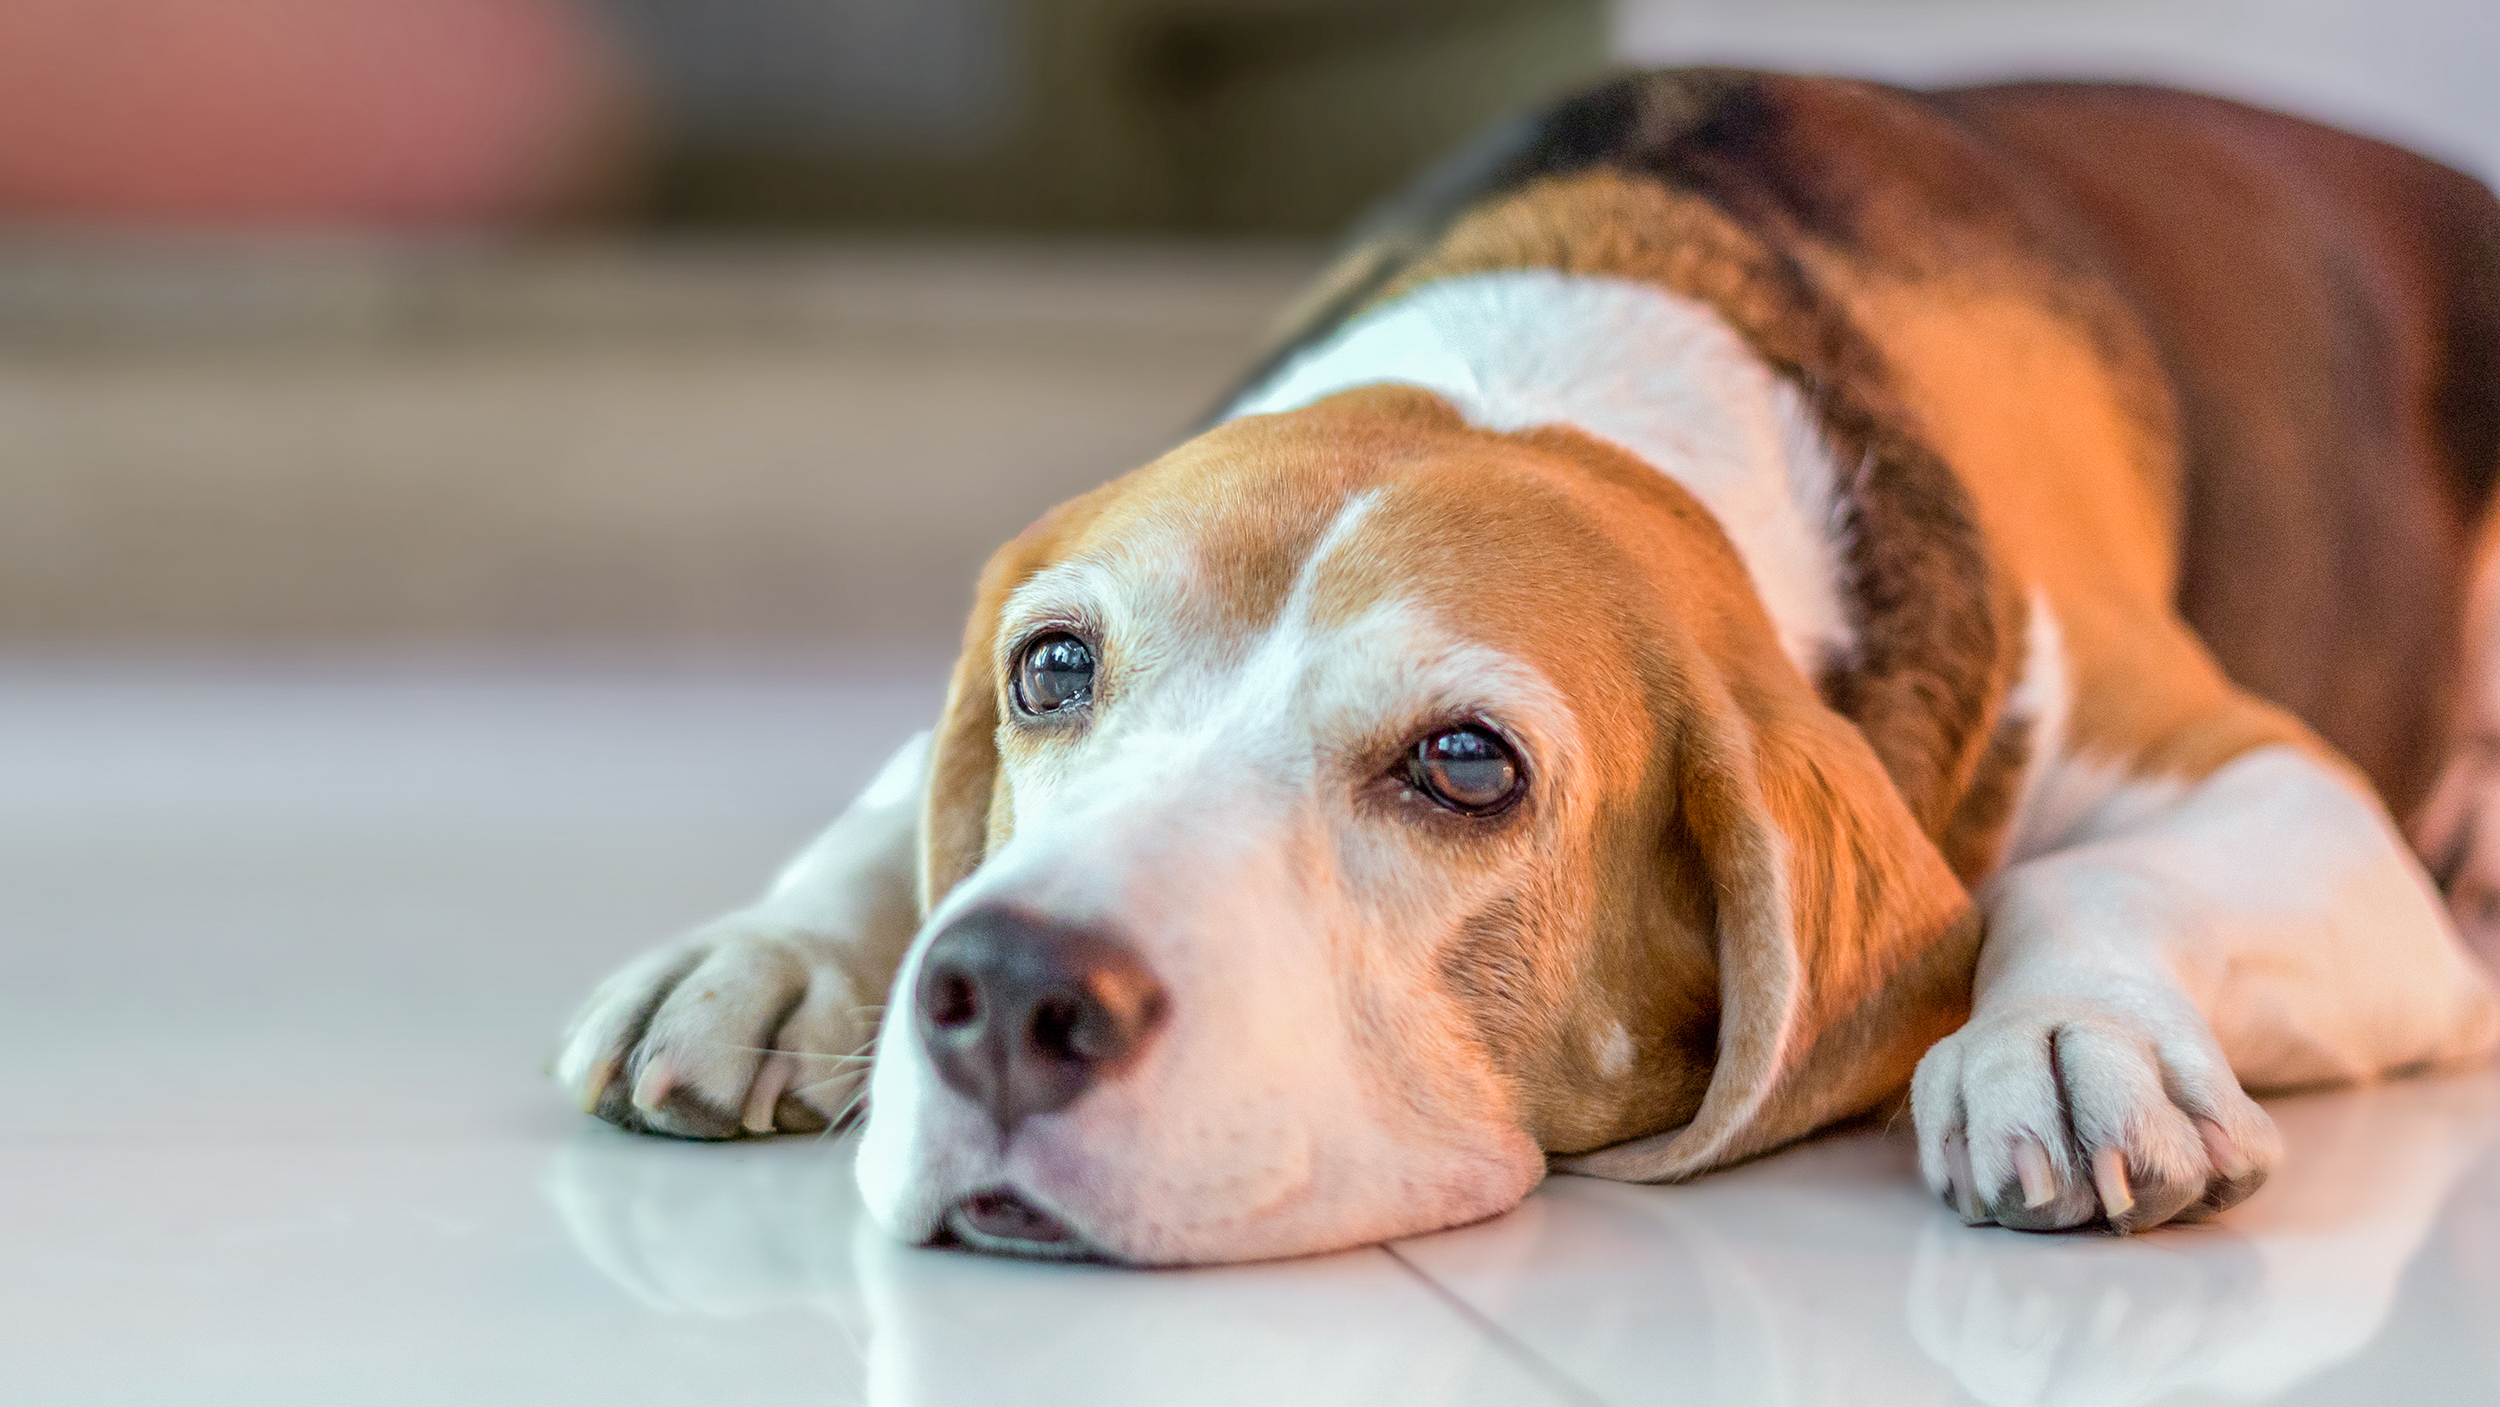 Adult Beagle lying down indoors on a tiled floor.